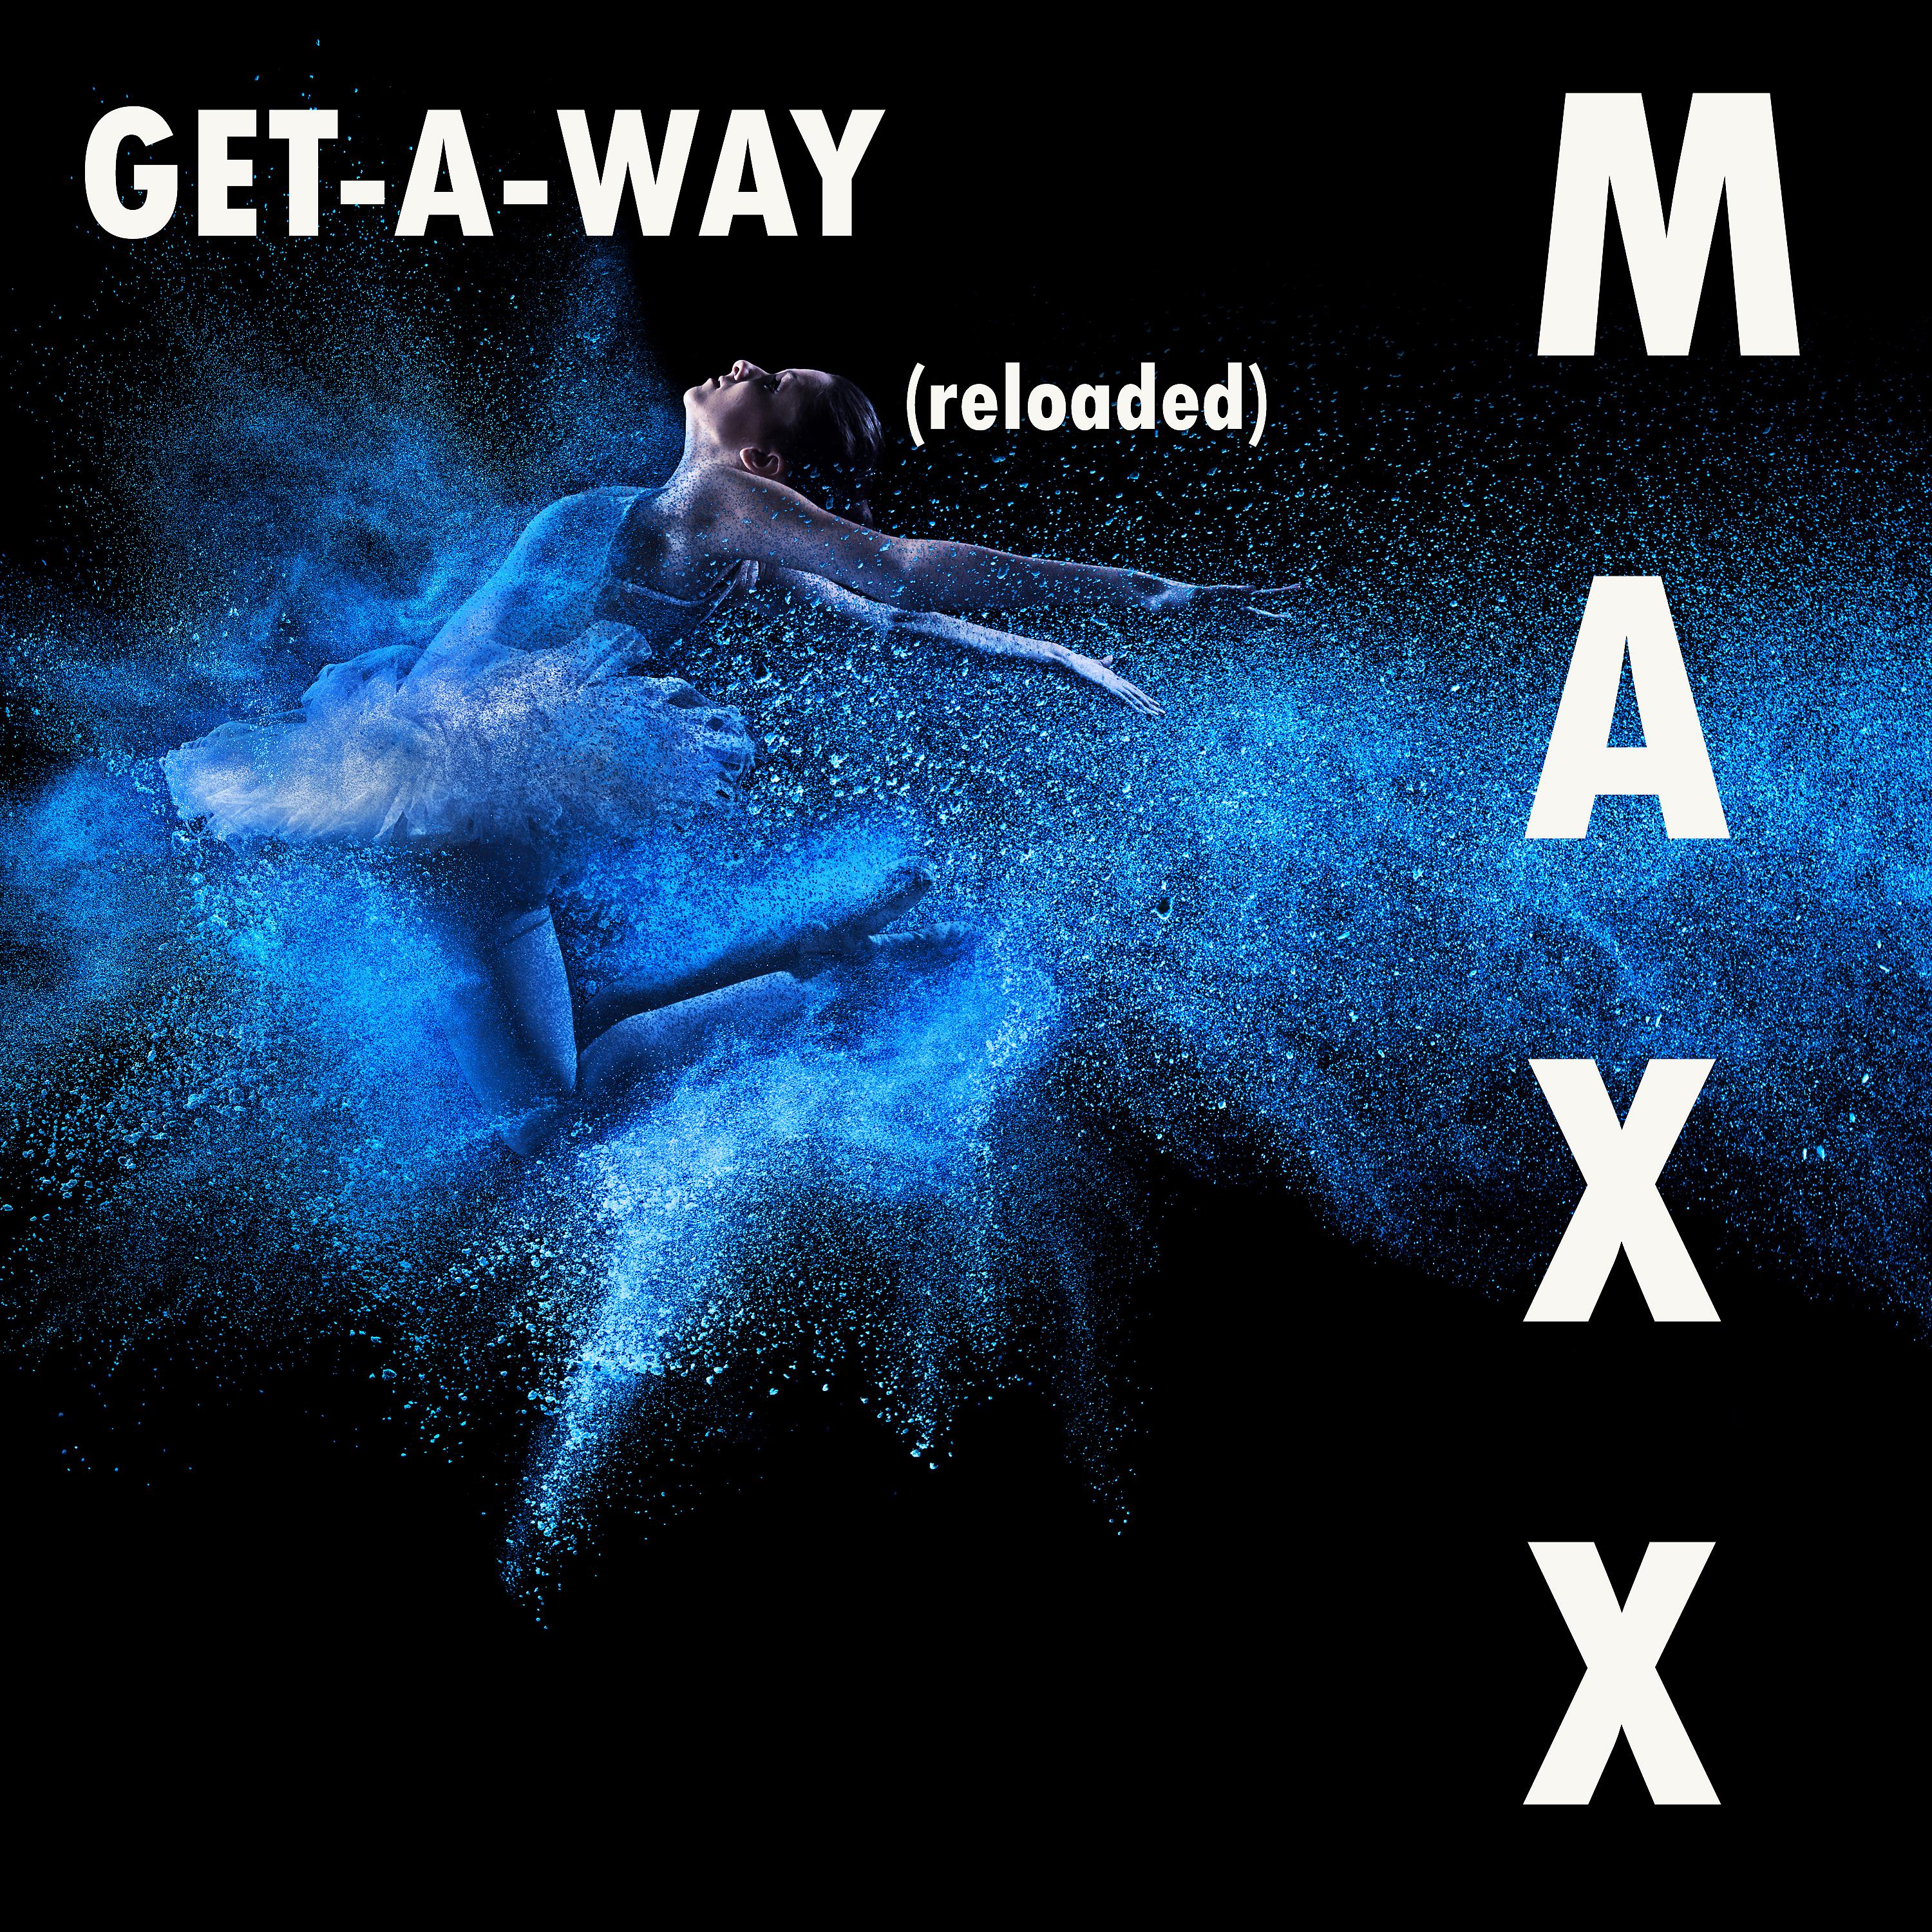 A want to get a way. Maxx get away. Maxx обложки альбомов. Maxx get a way обложка. Get way.